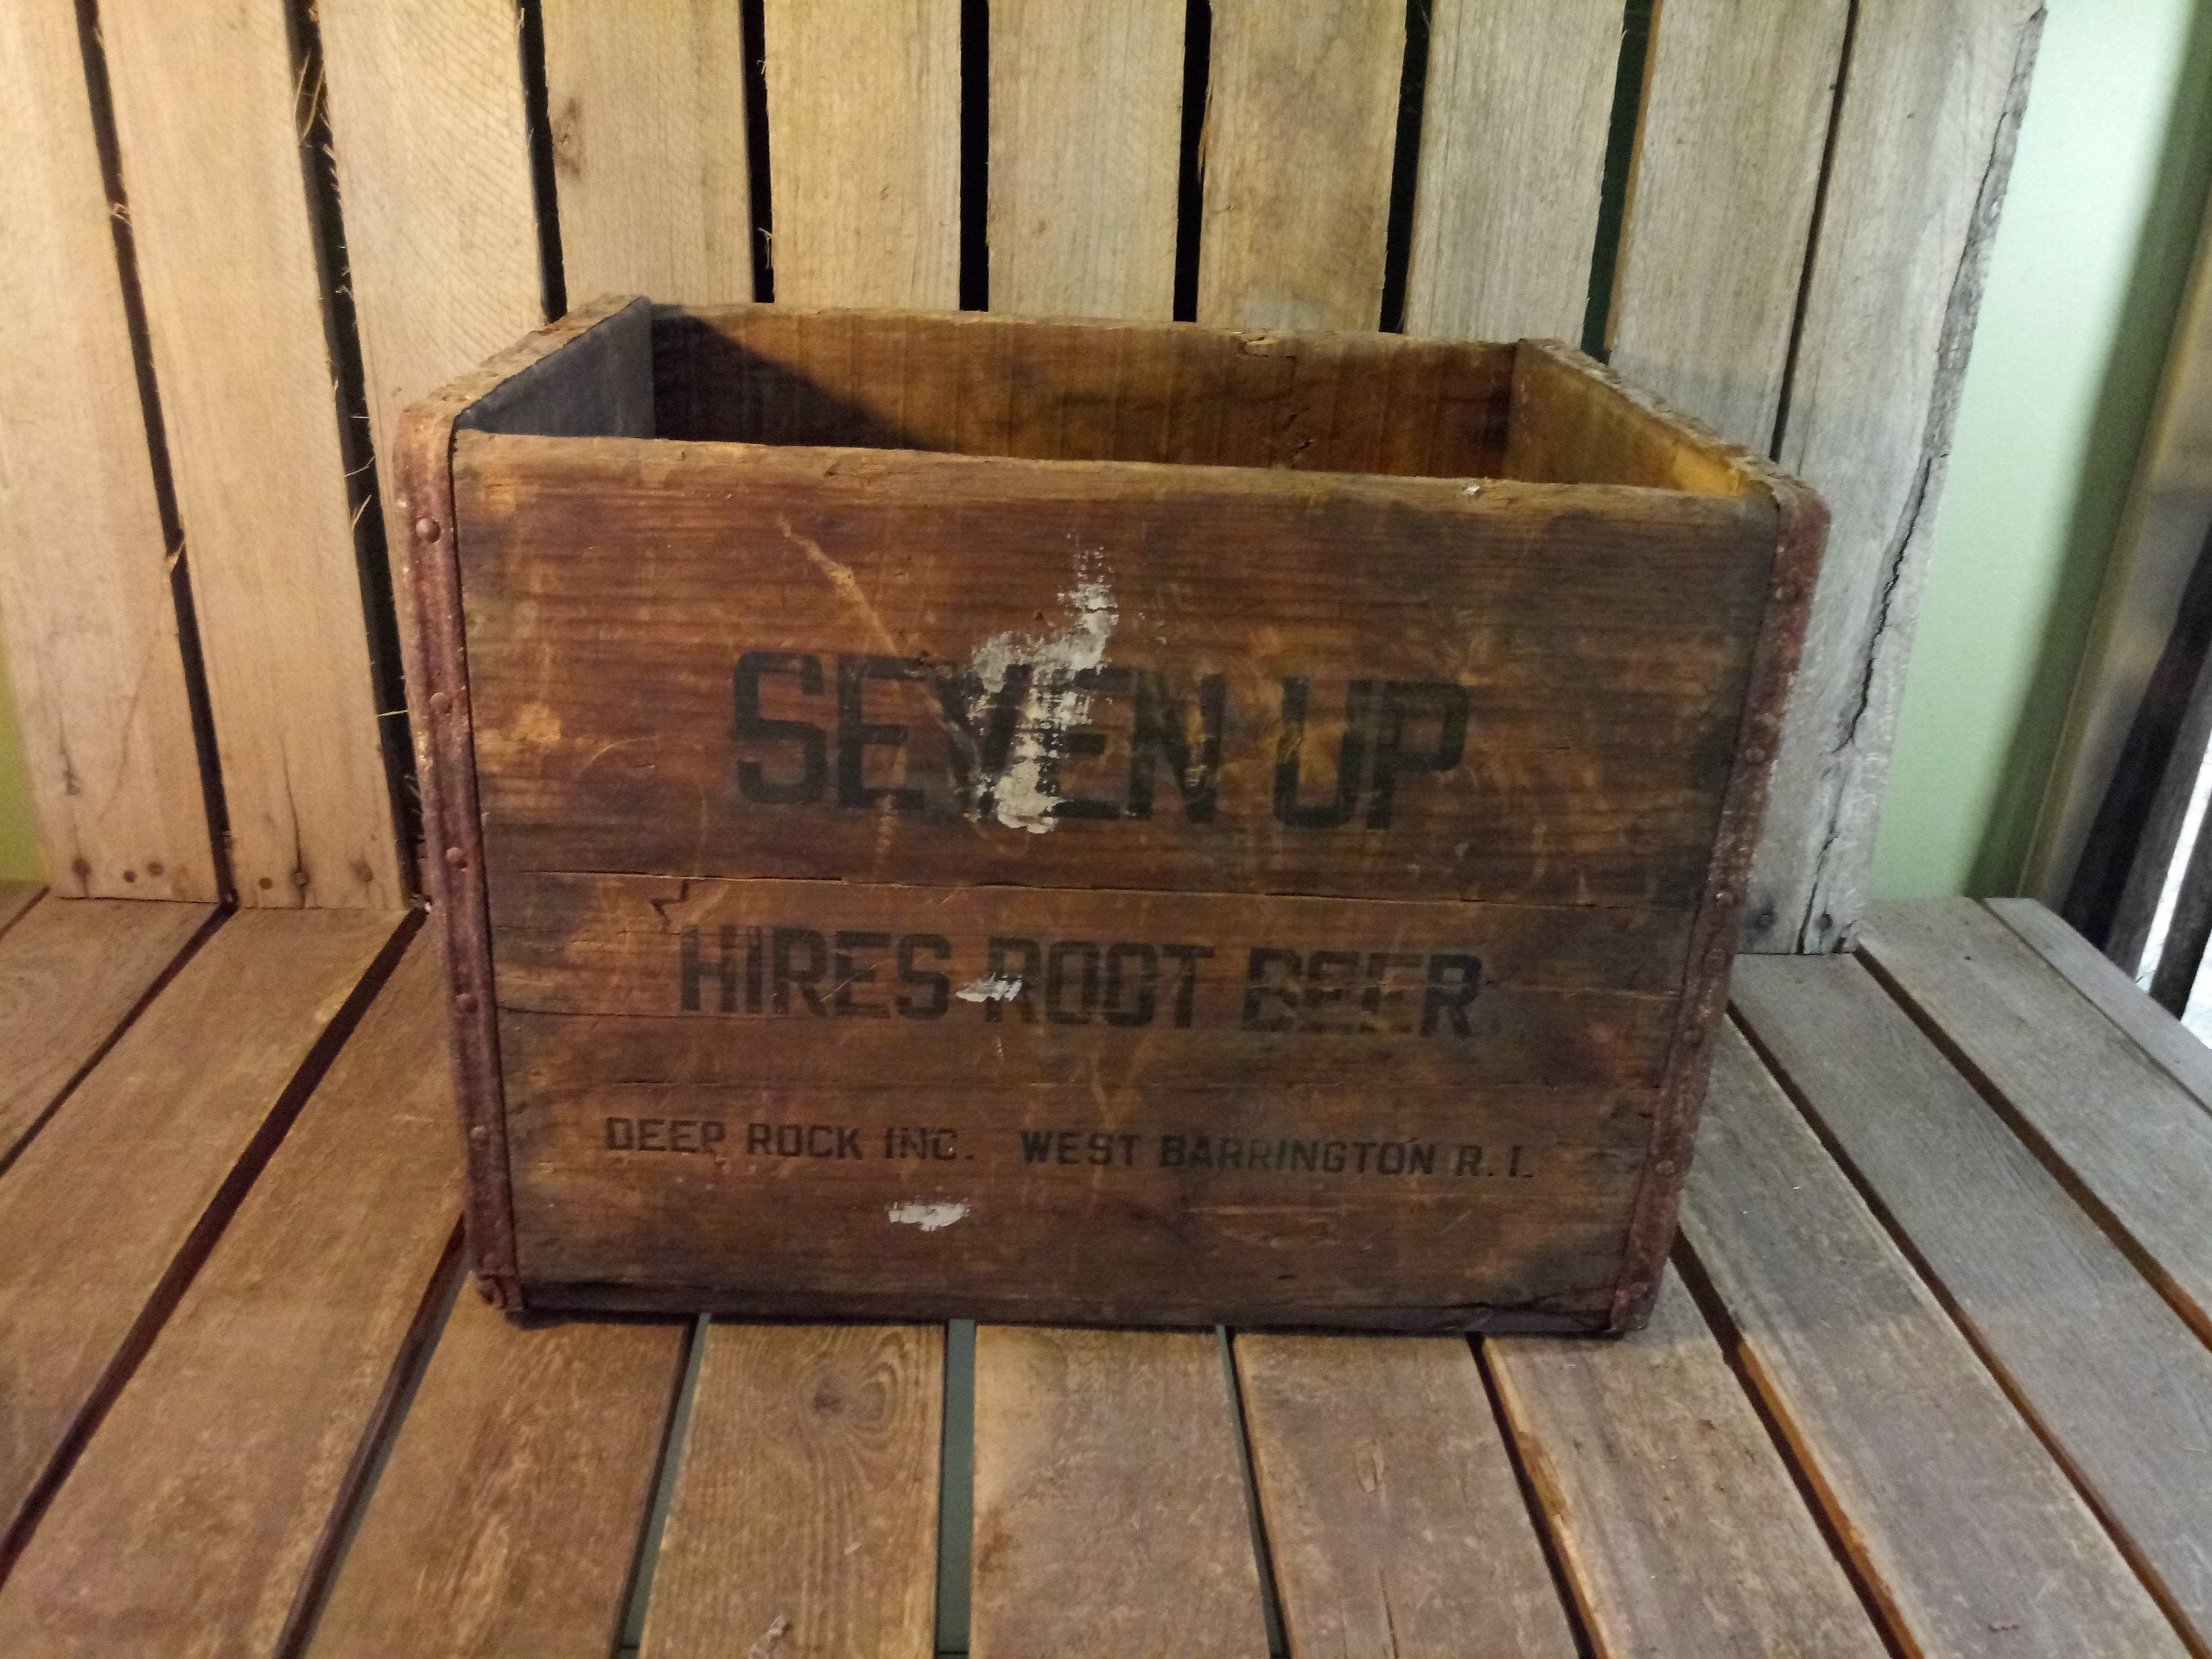 Vintage Wooden AMERICAN BEER Bottle Carrier Crate, American